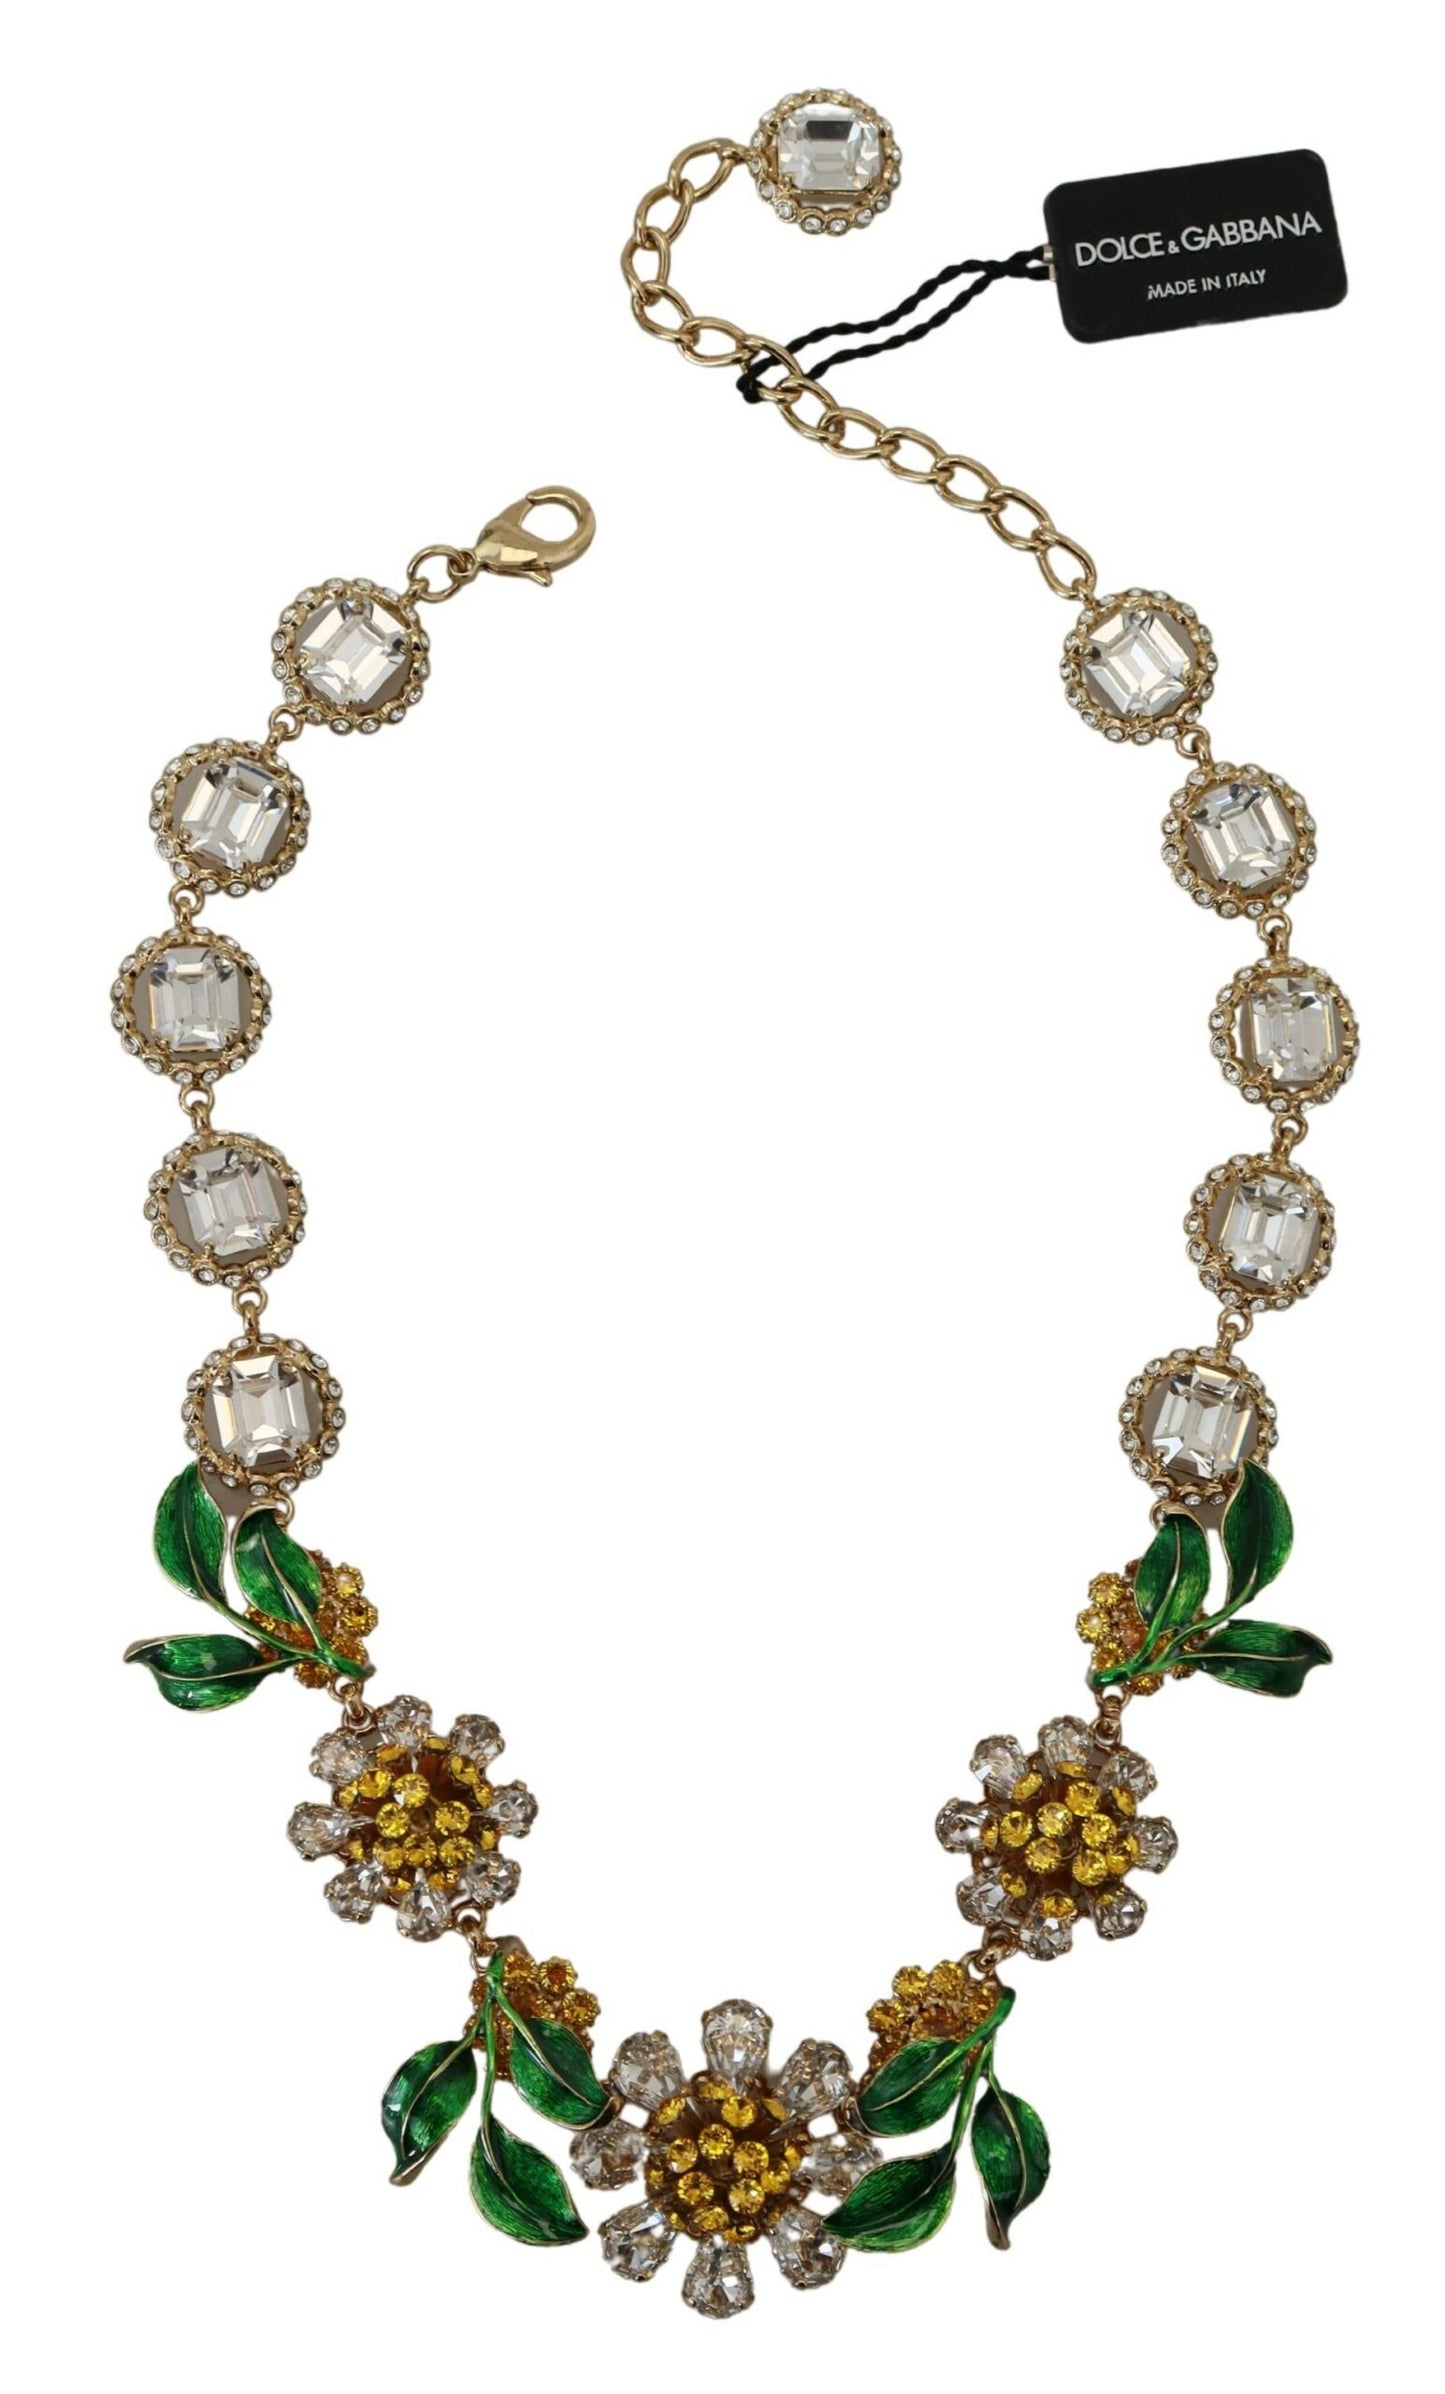 Elegant Gold Tone Crystal Statement Necklace